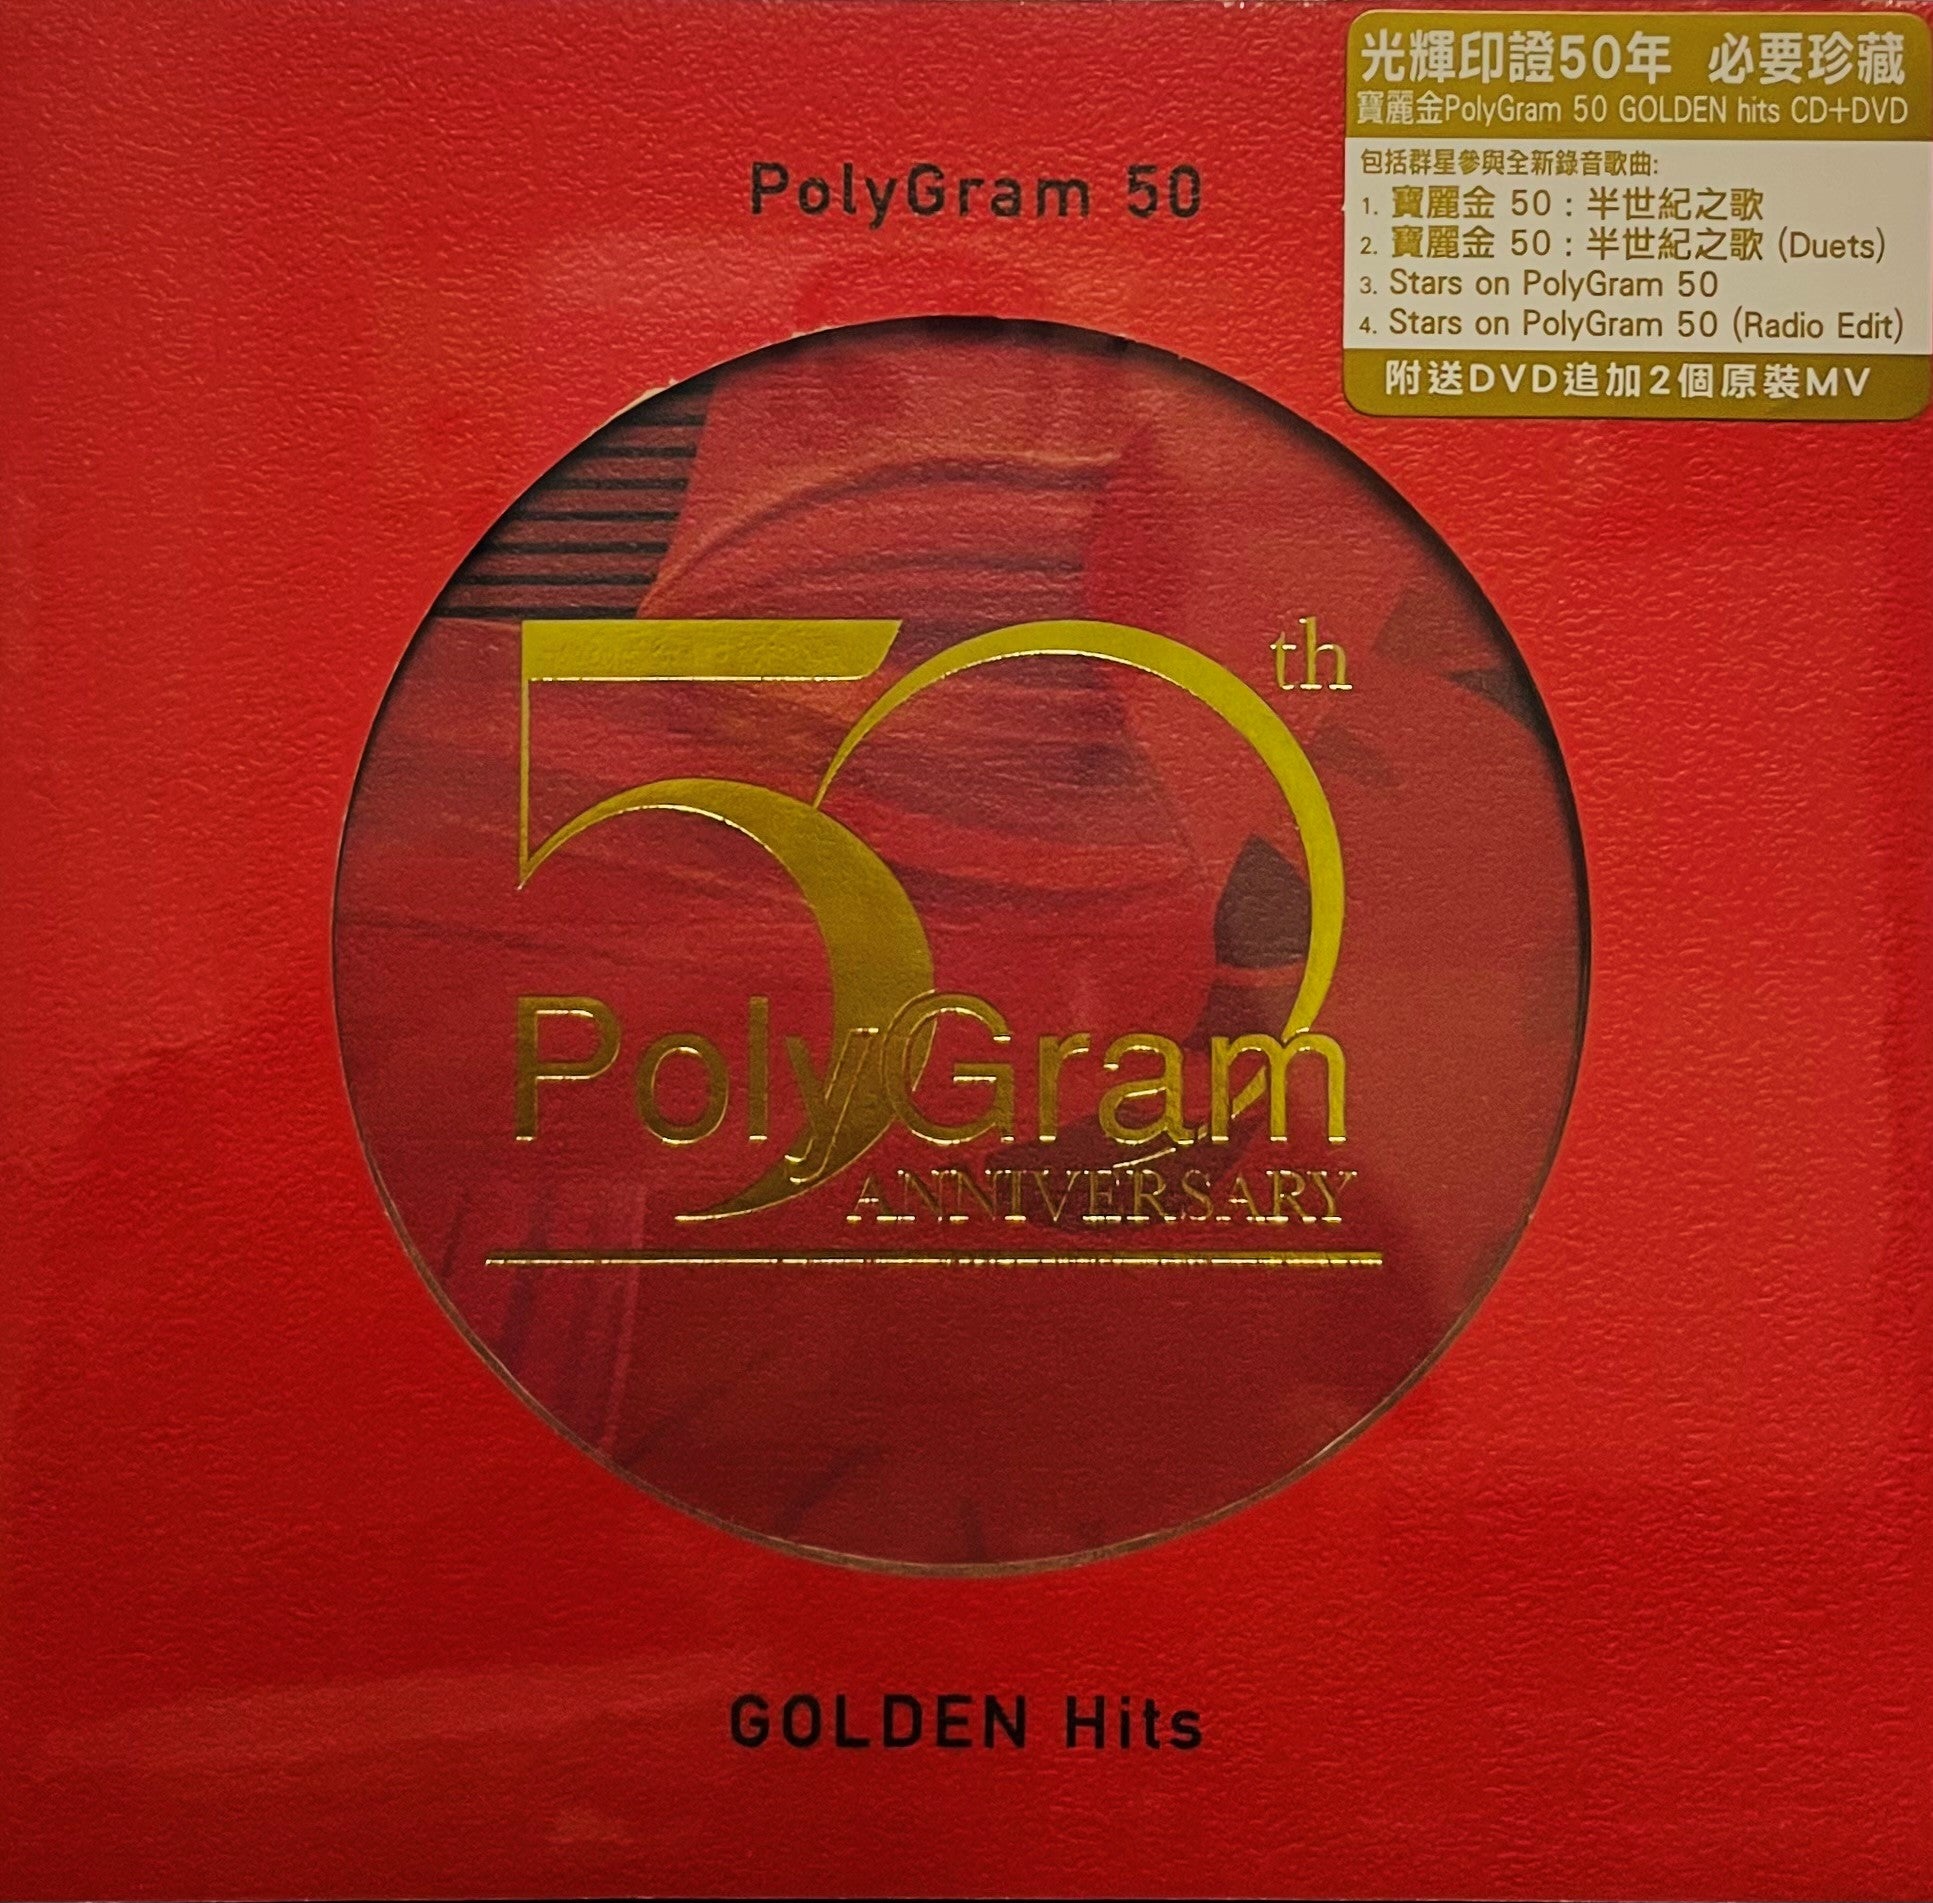 50TH POLYGRAM ANNIVERSARY GOLDEN HITS - CANTONESE MEDLEY - V.A (CD & DVD)